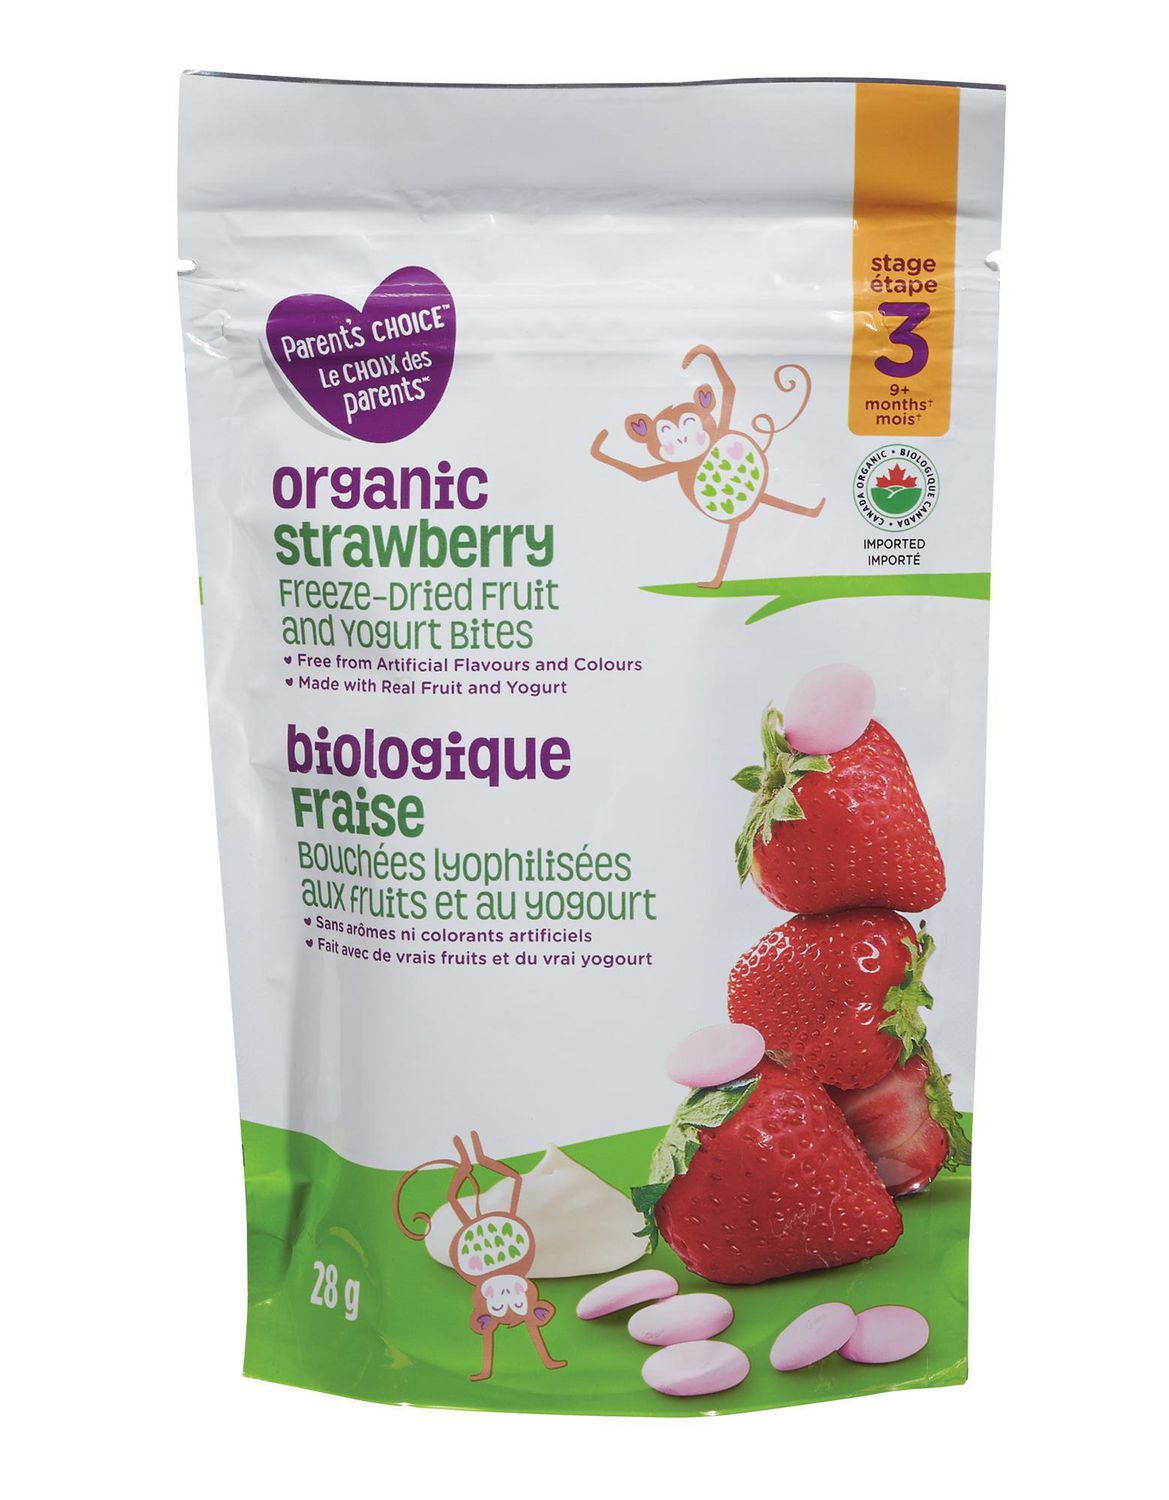 Parent's Choice Strawberry Yogurt Bites 28g